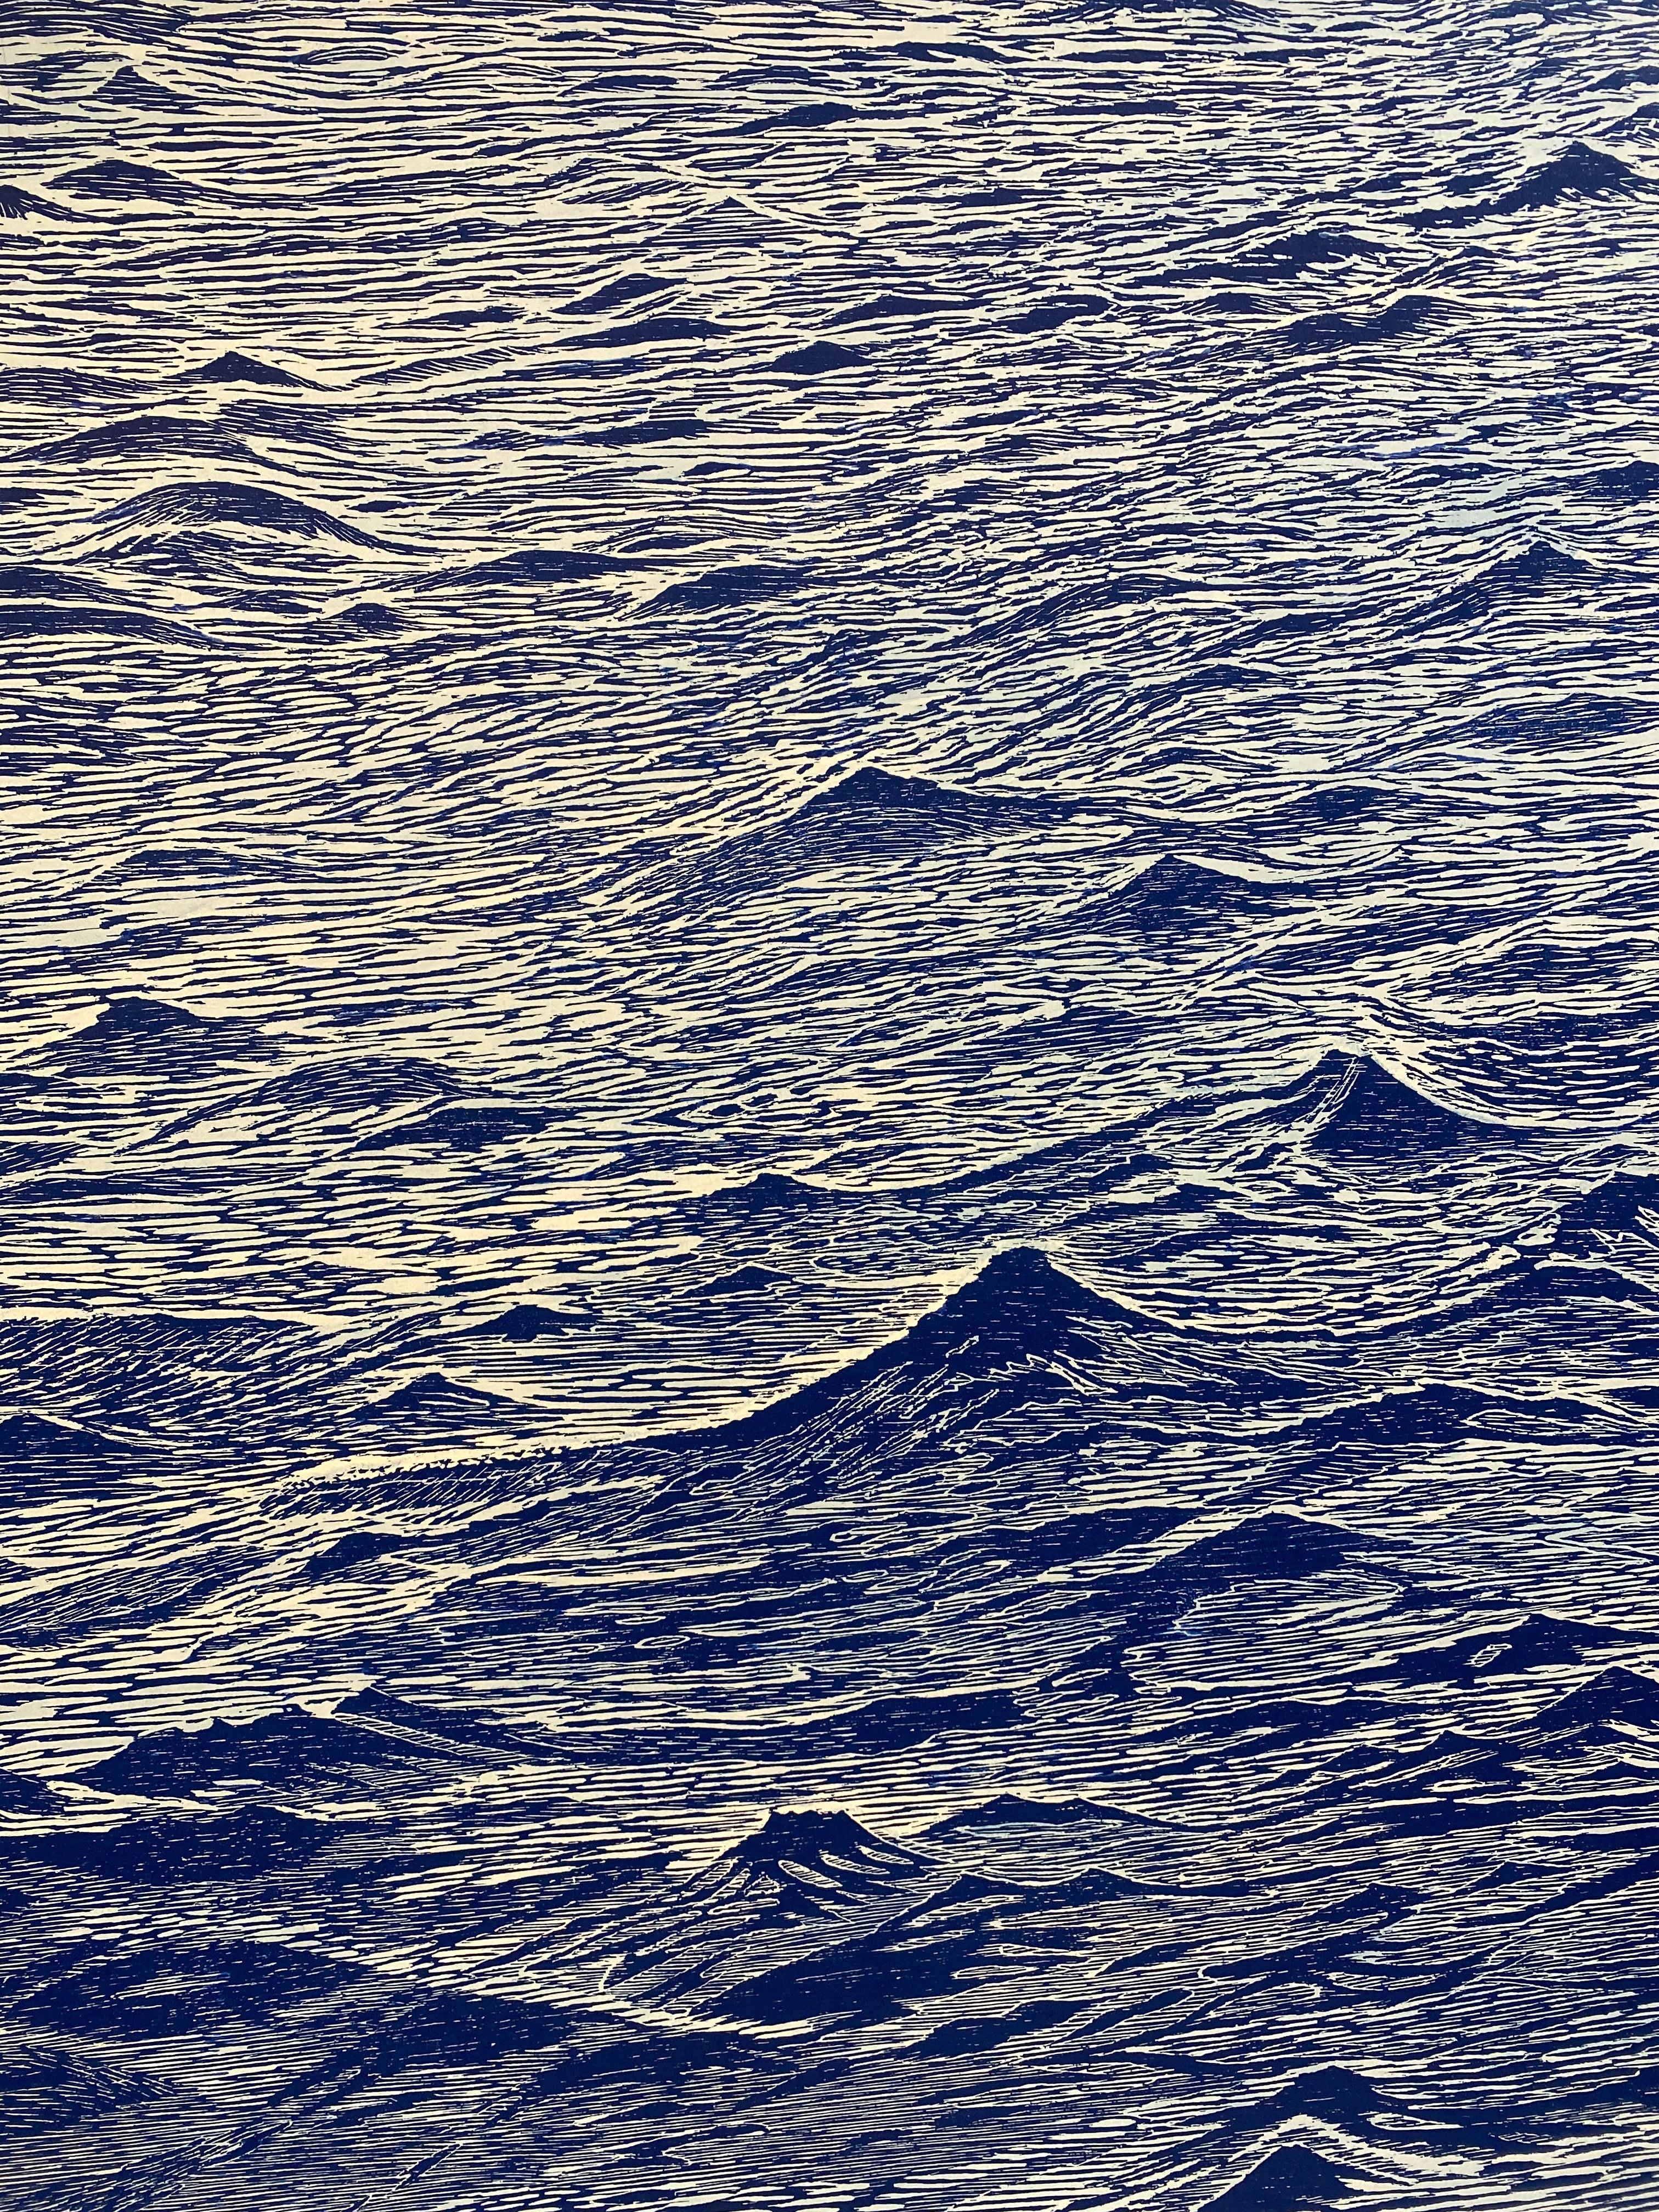 Seascape 24, Woodcut Print of Ocean Waves in Light Blue and Dark Cobalt, Navy 9